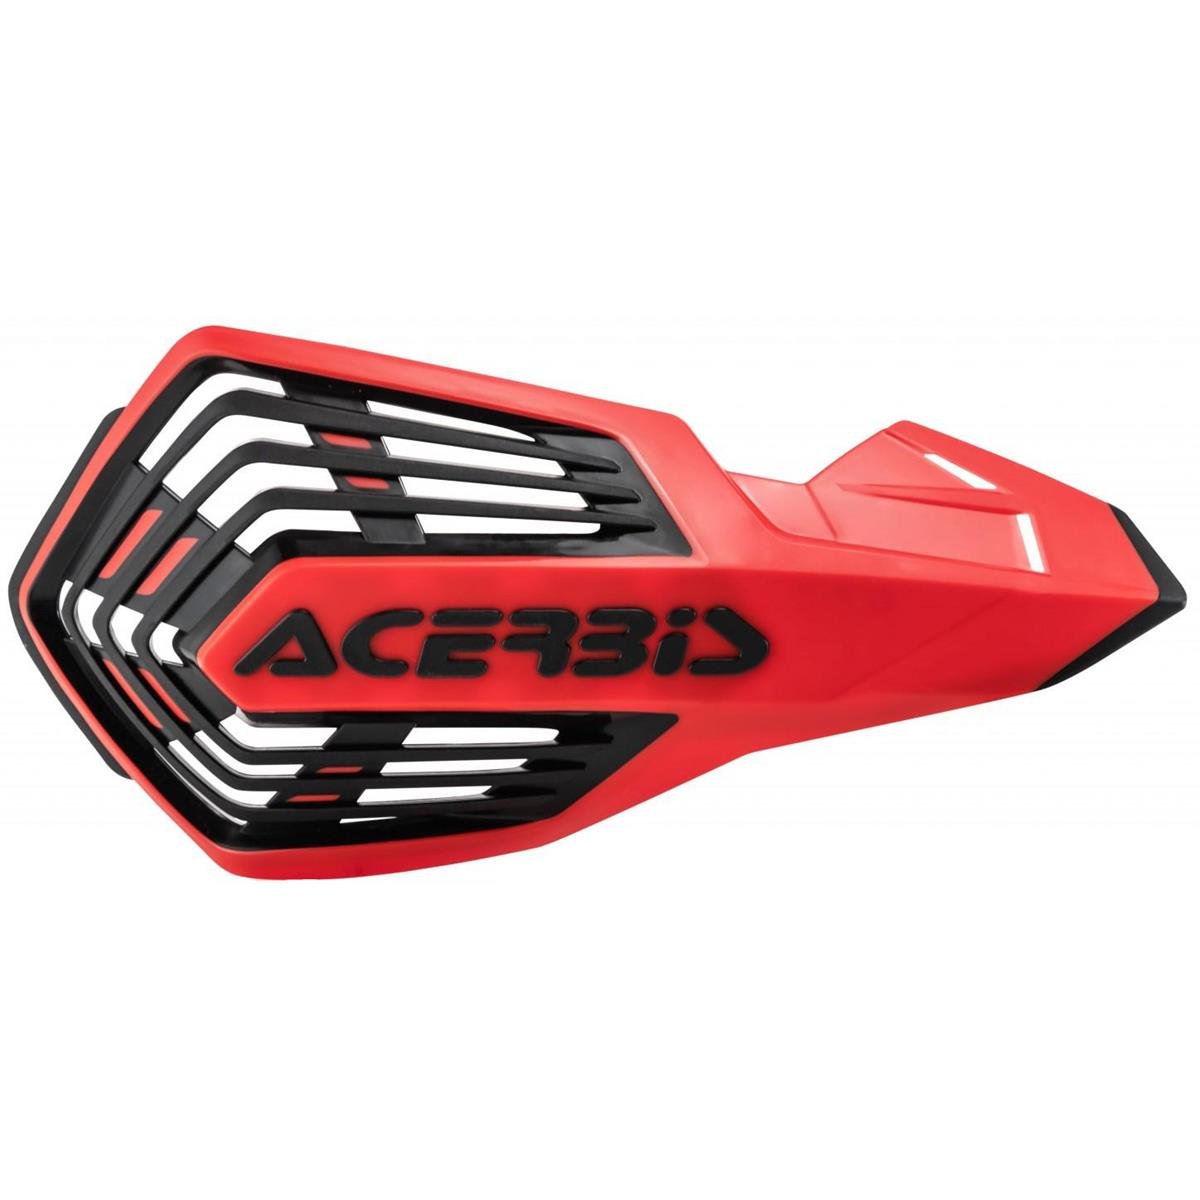 Acerbis Handguards X-Future Red/Black, Incl. Mounting Kit